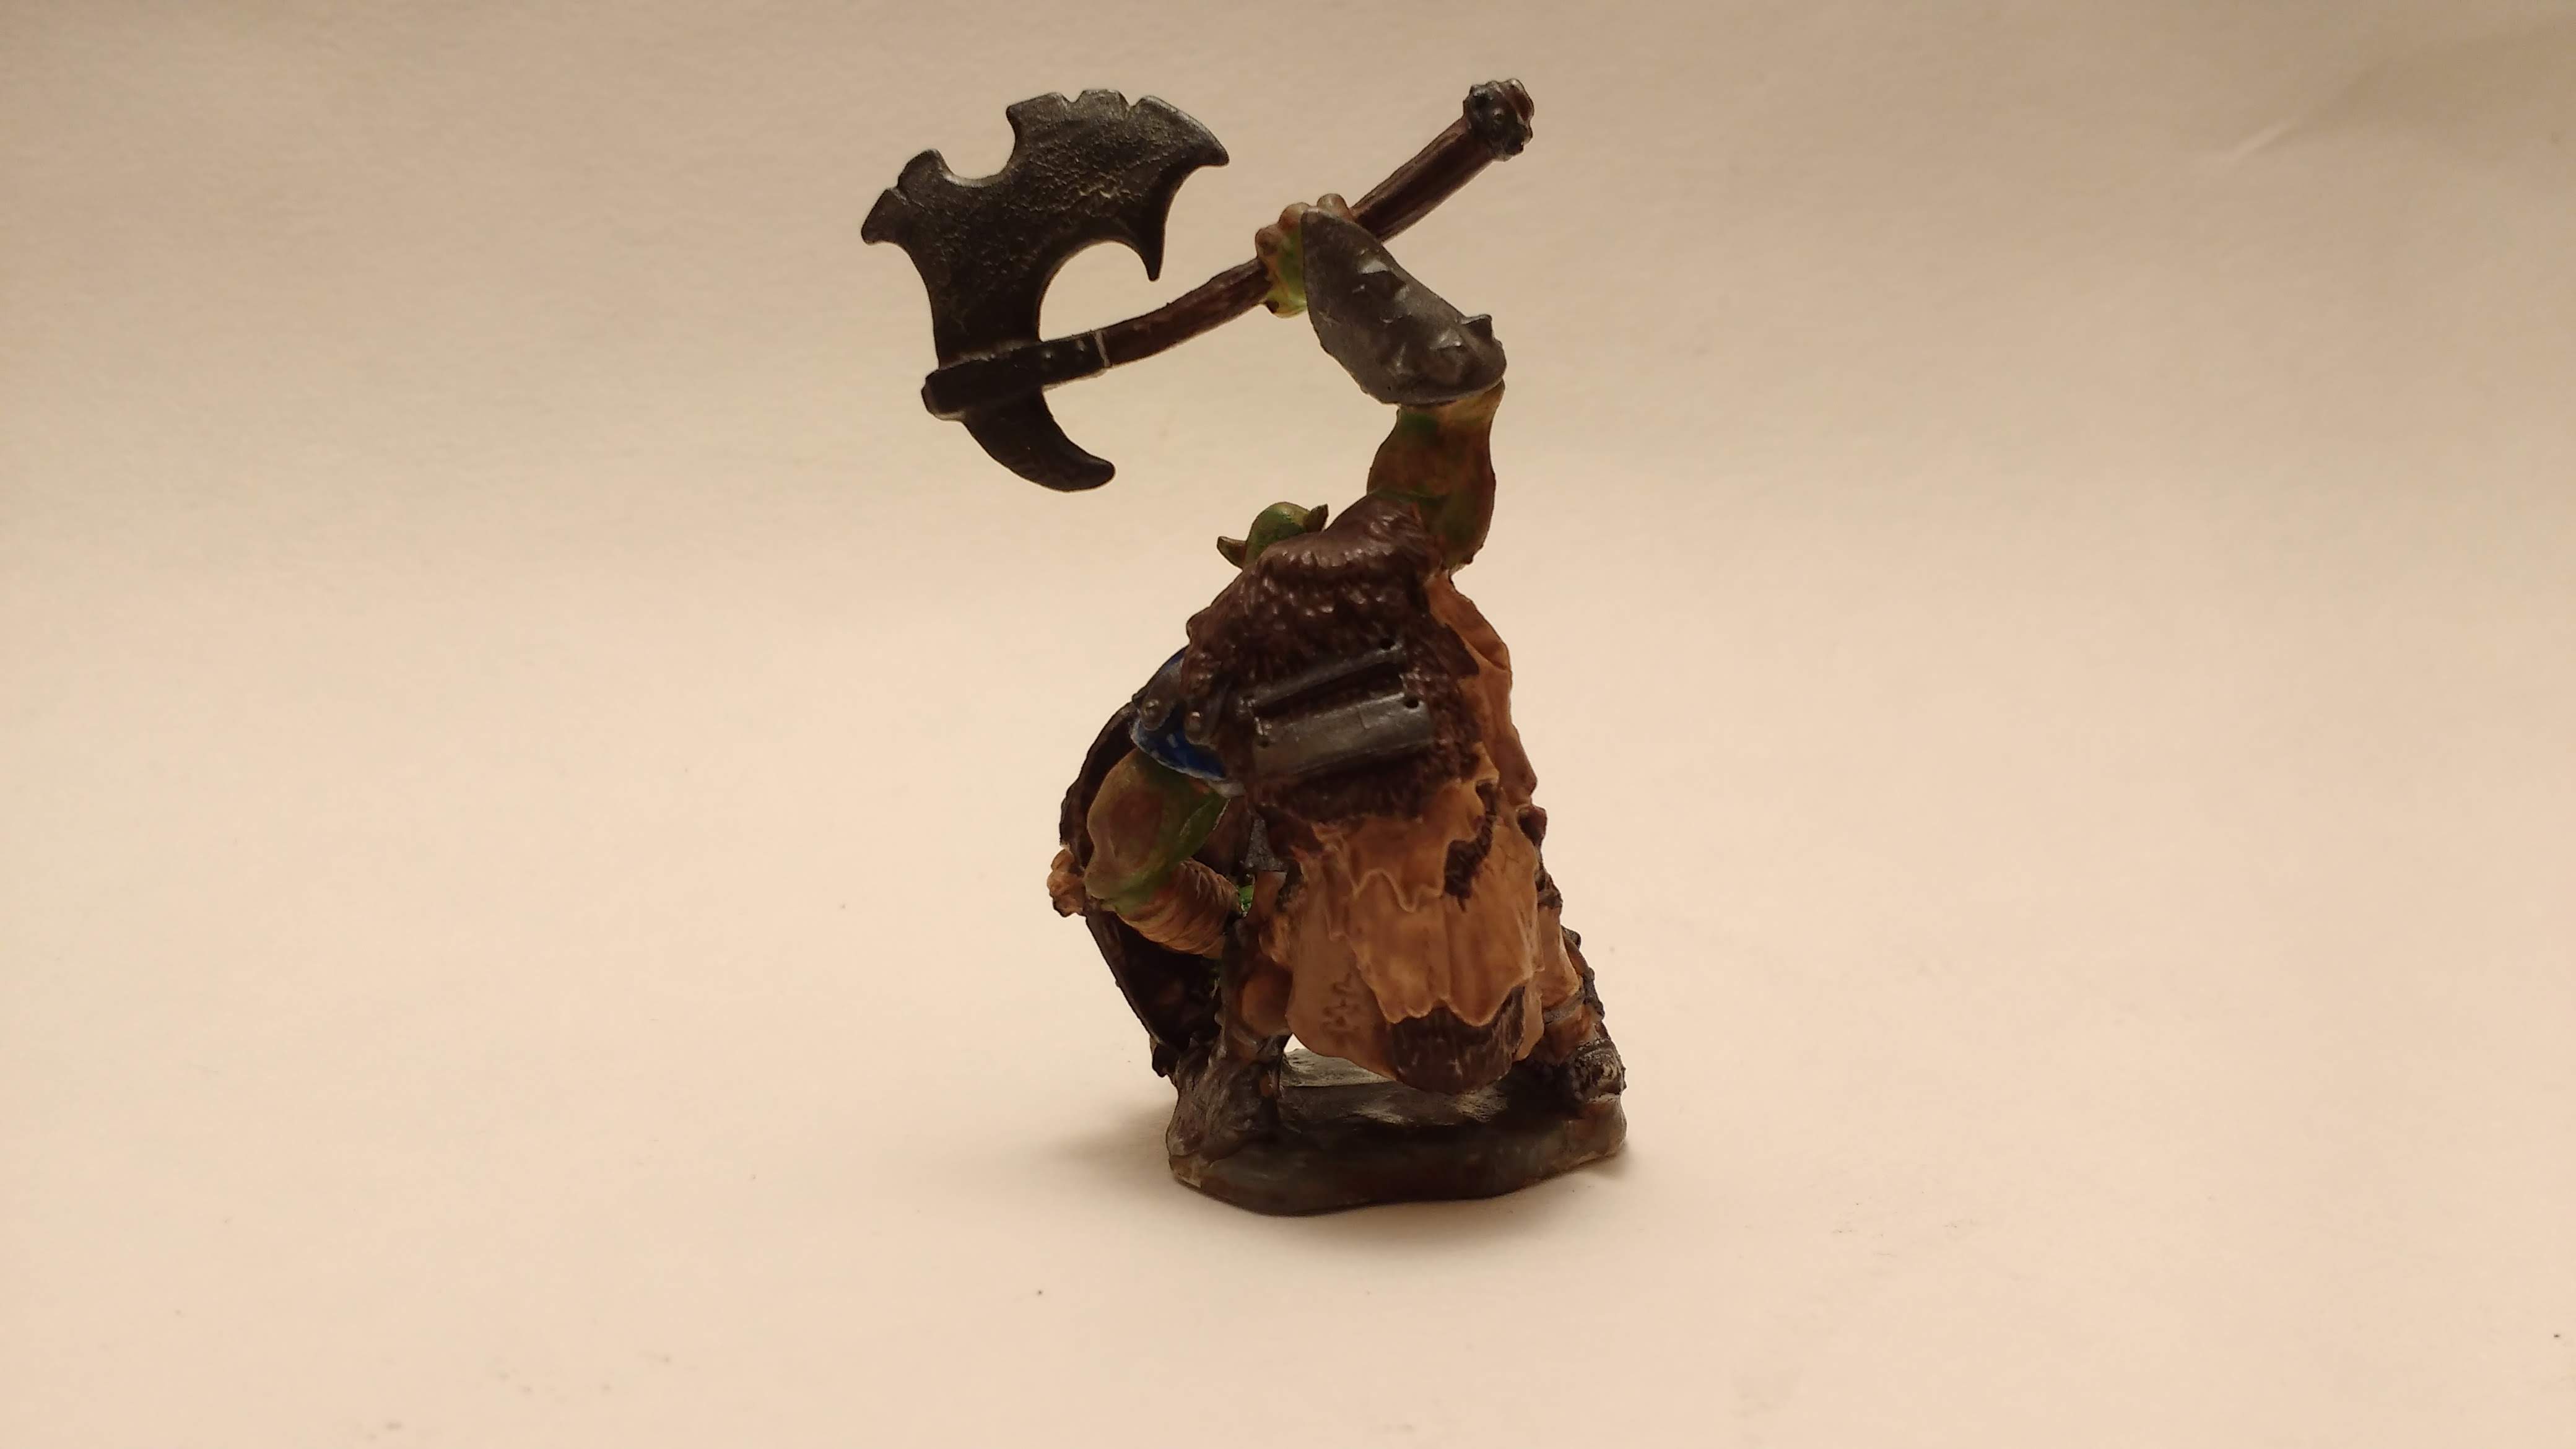 Kavorgh Orc Warboss miniature from Reaper Bones viewed from behind